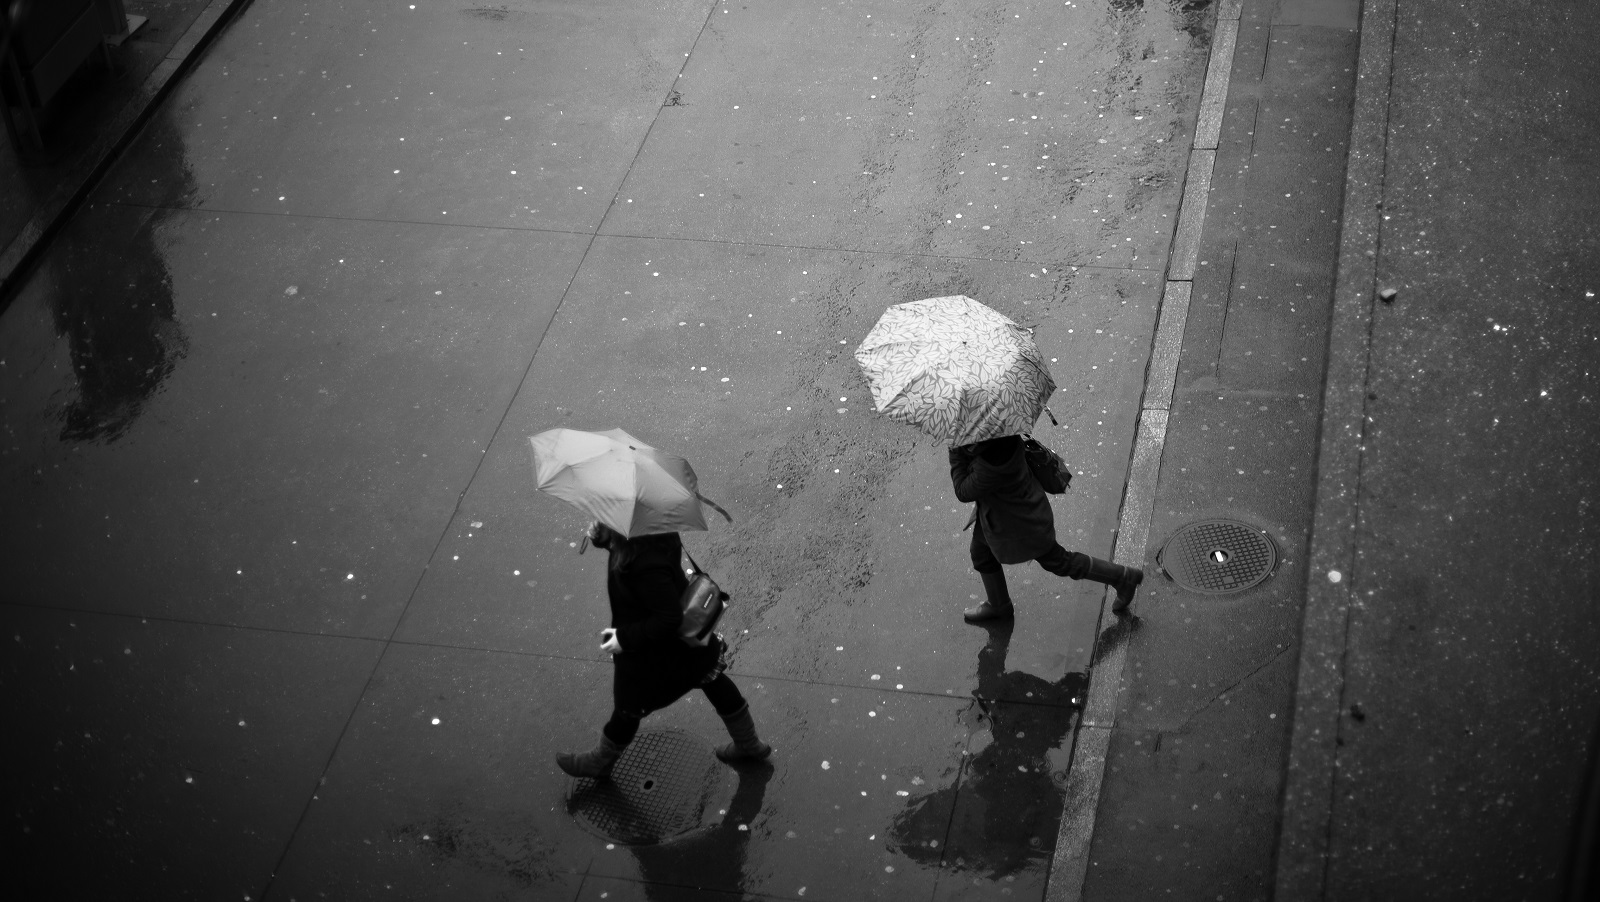 They like rain. People take Umbrellas in Rainy Days.